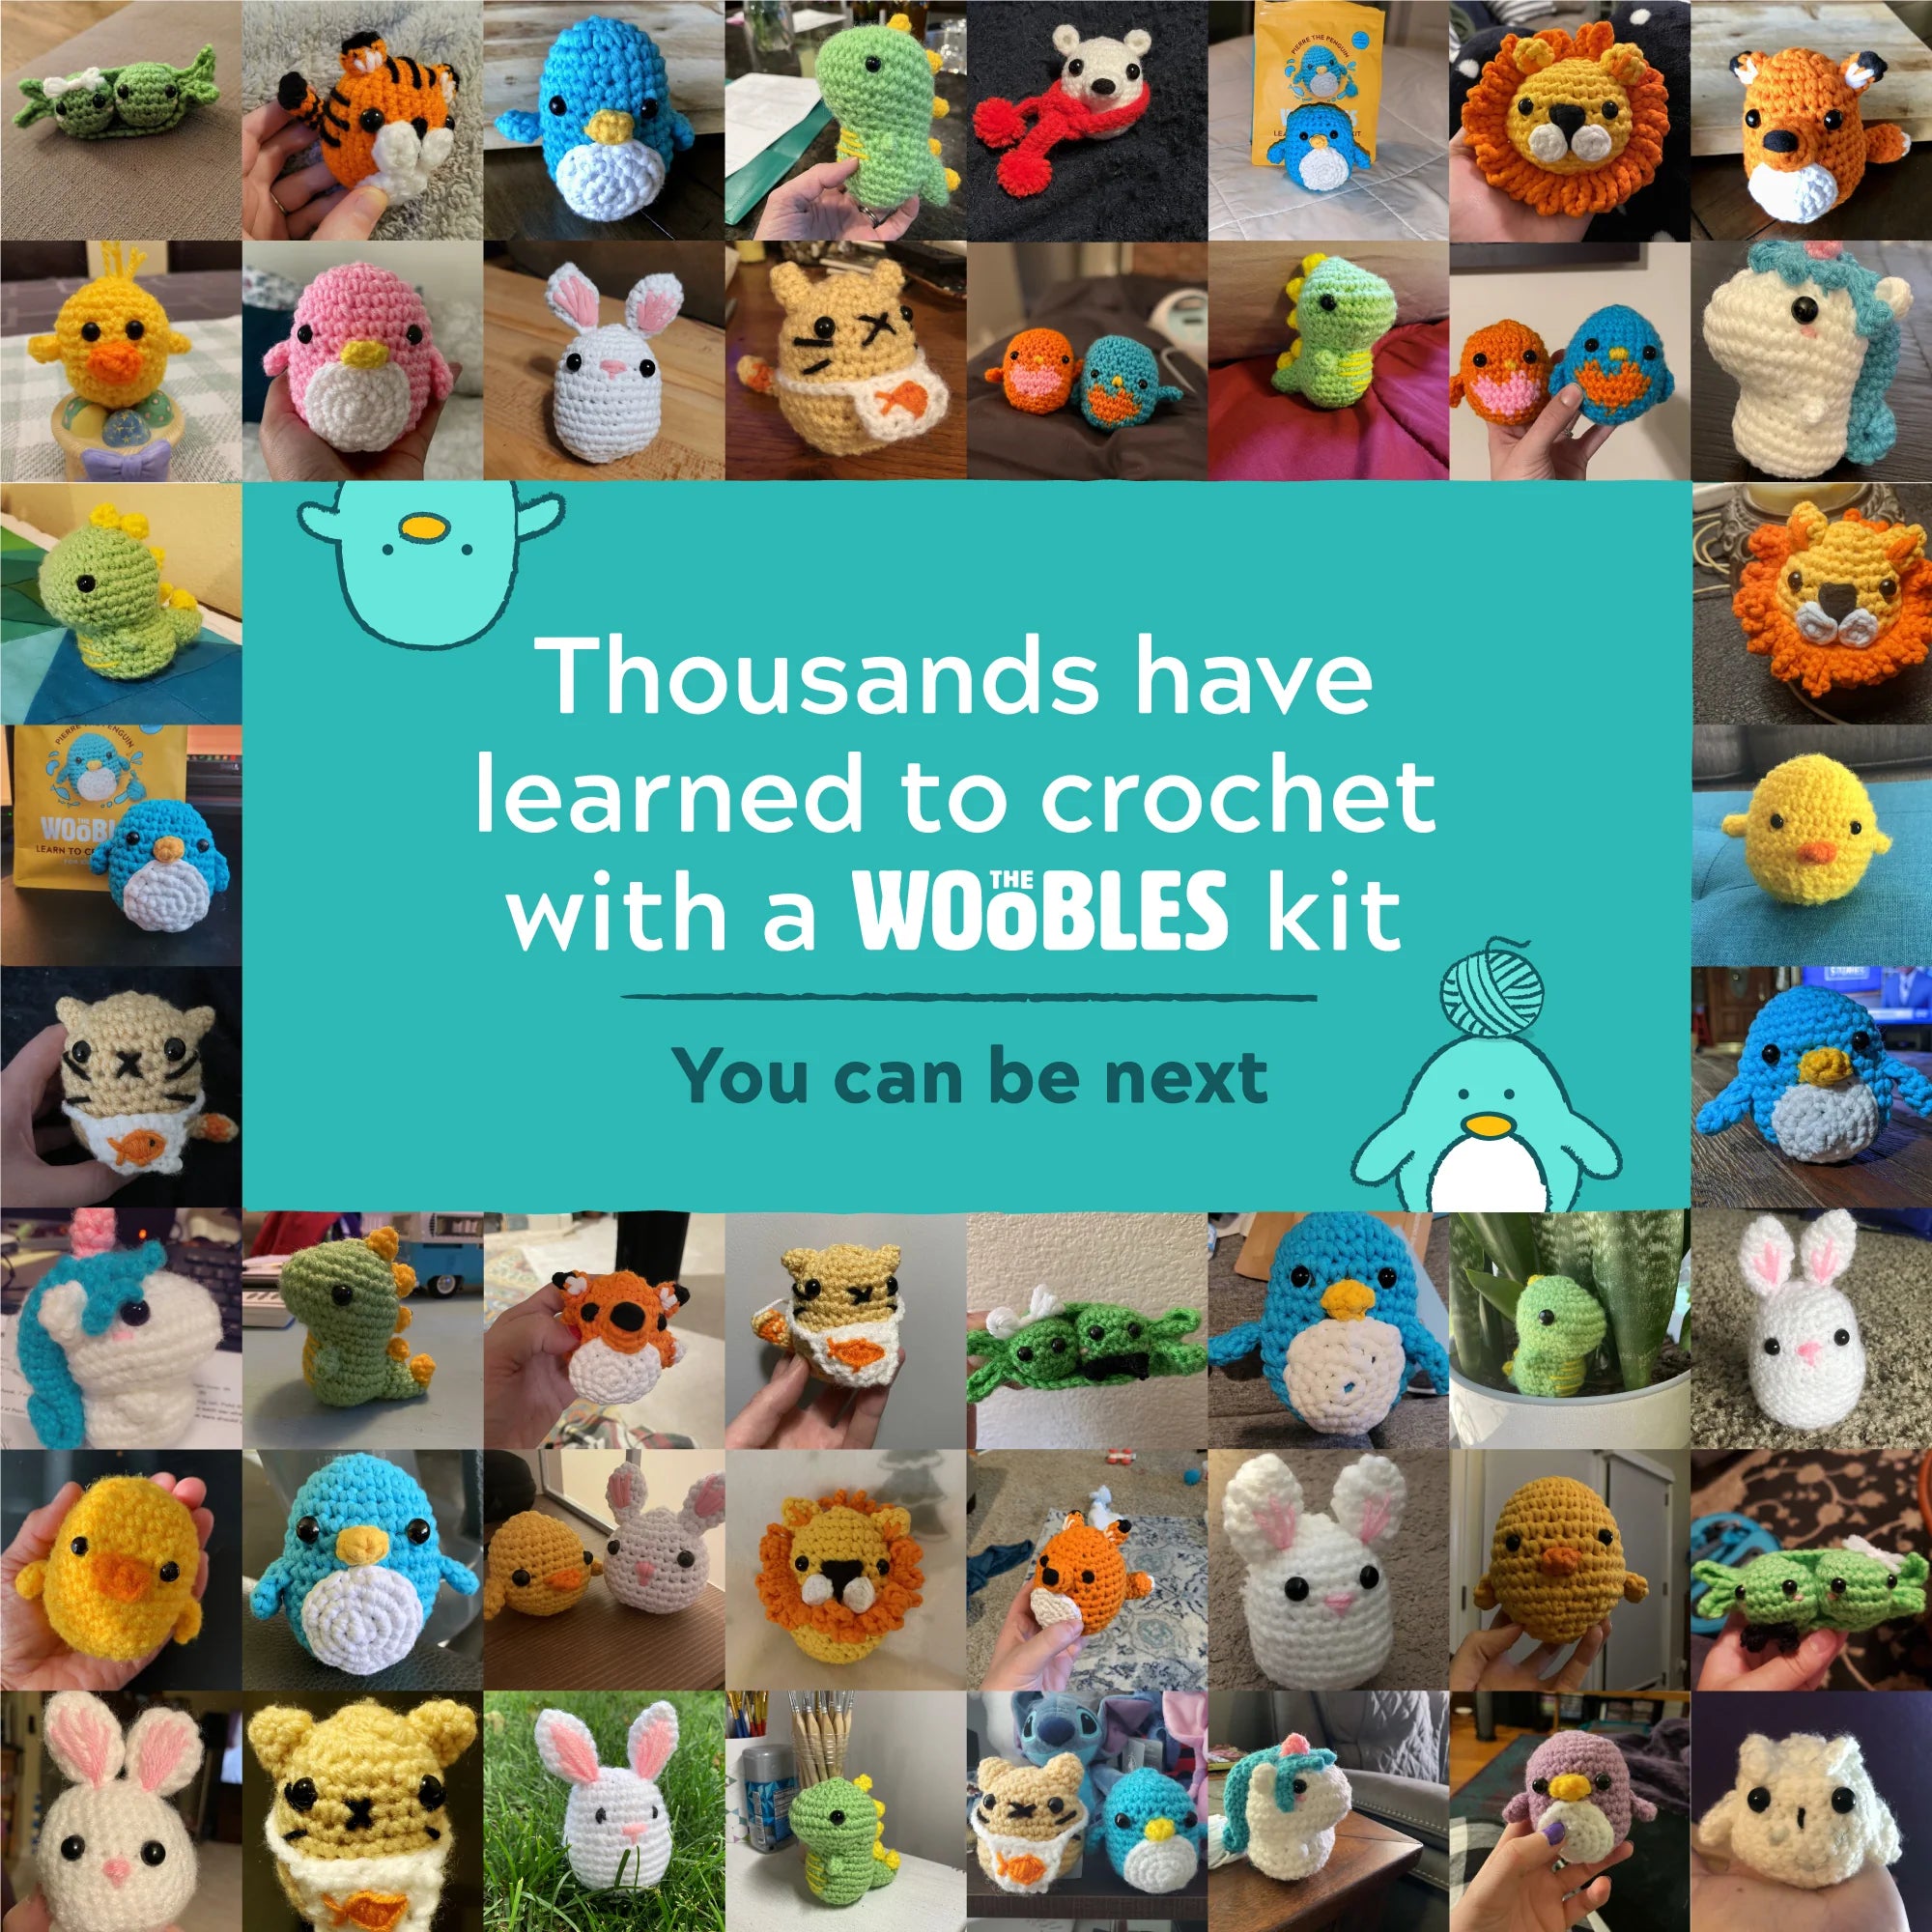 The woobles Crochet kits